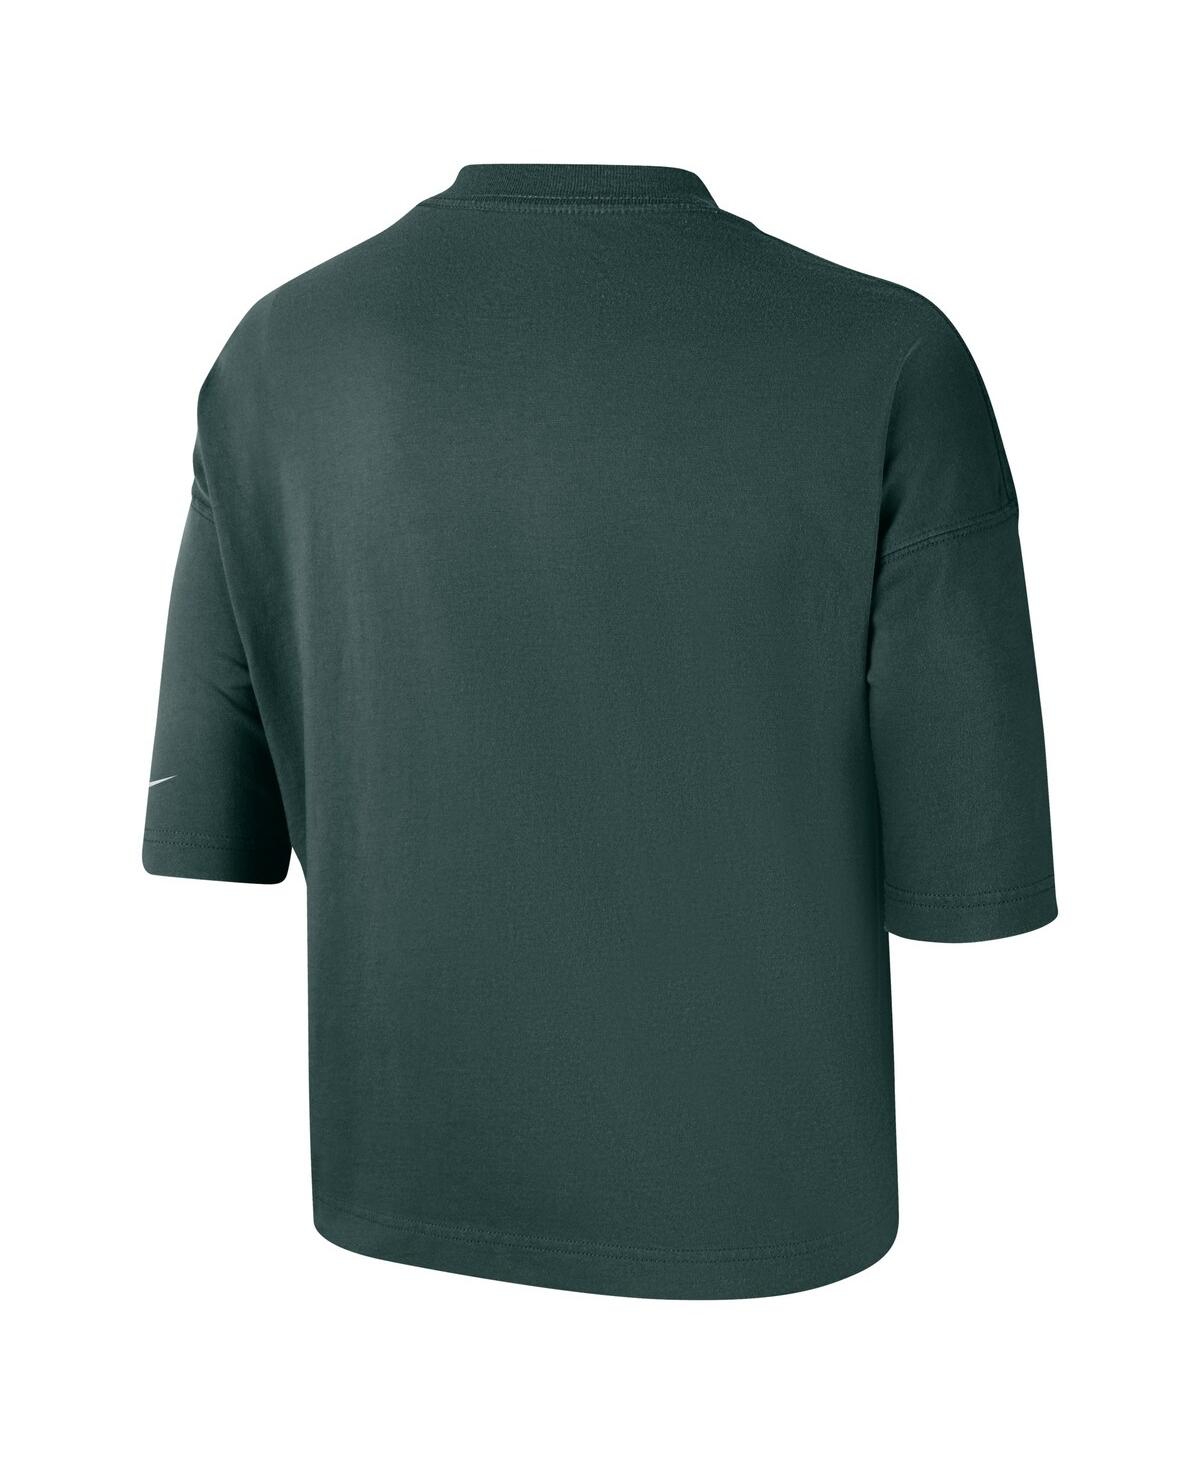 Shop Nike Women's  Green Michigan State Spartans Crop Performance T-shirt